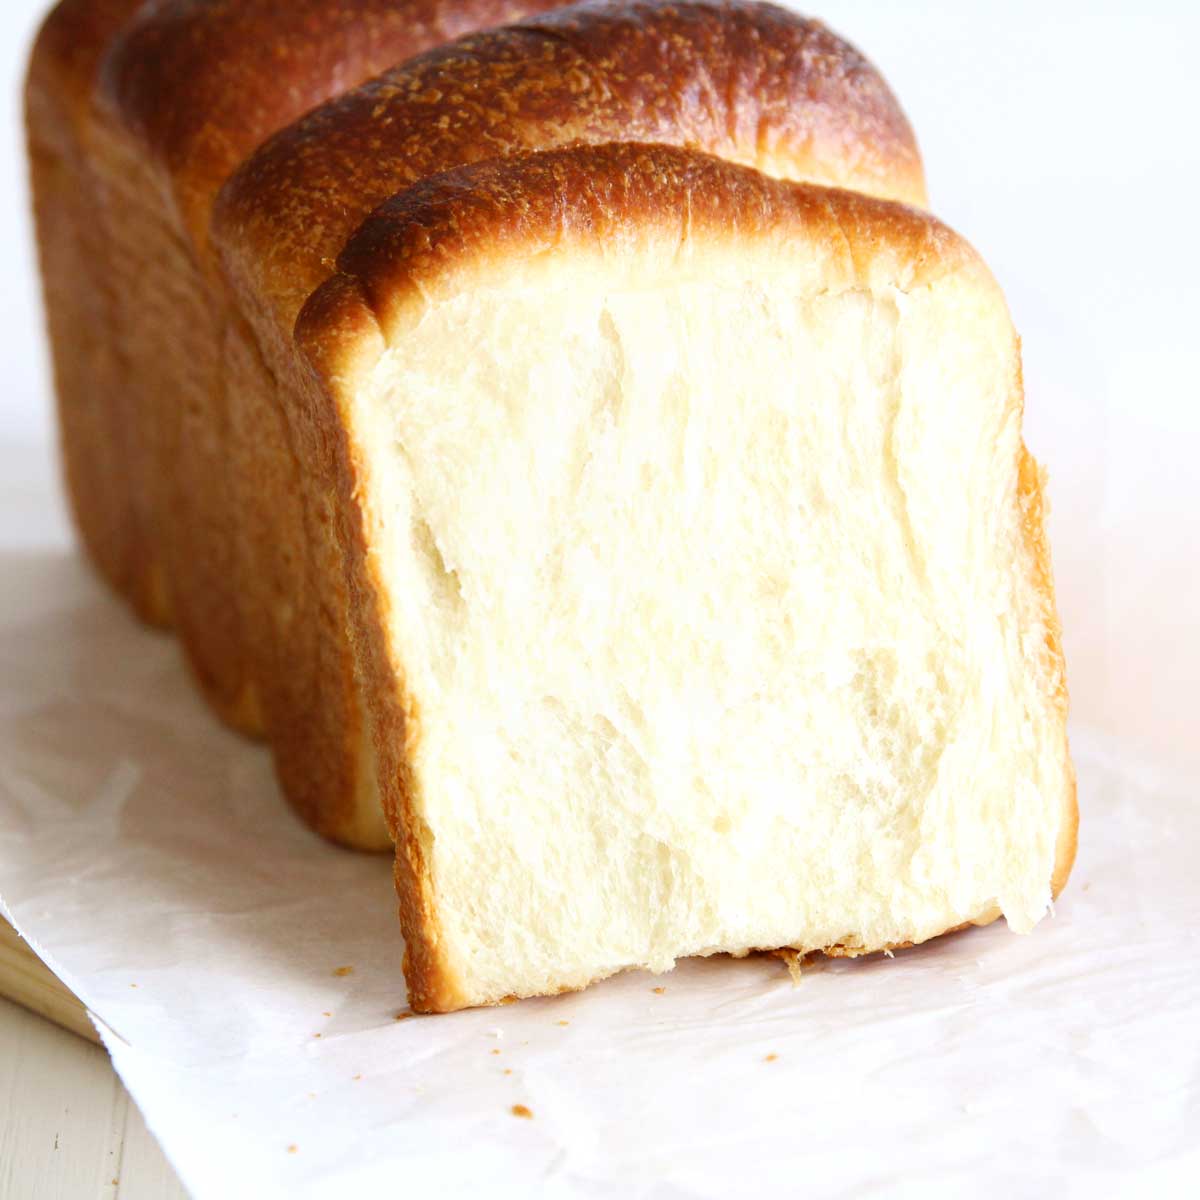 Soft & Silky Coconut Cream Yeast Bread (Vegan Friendly) - bread